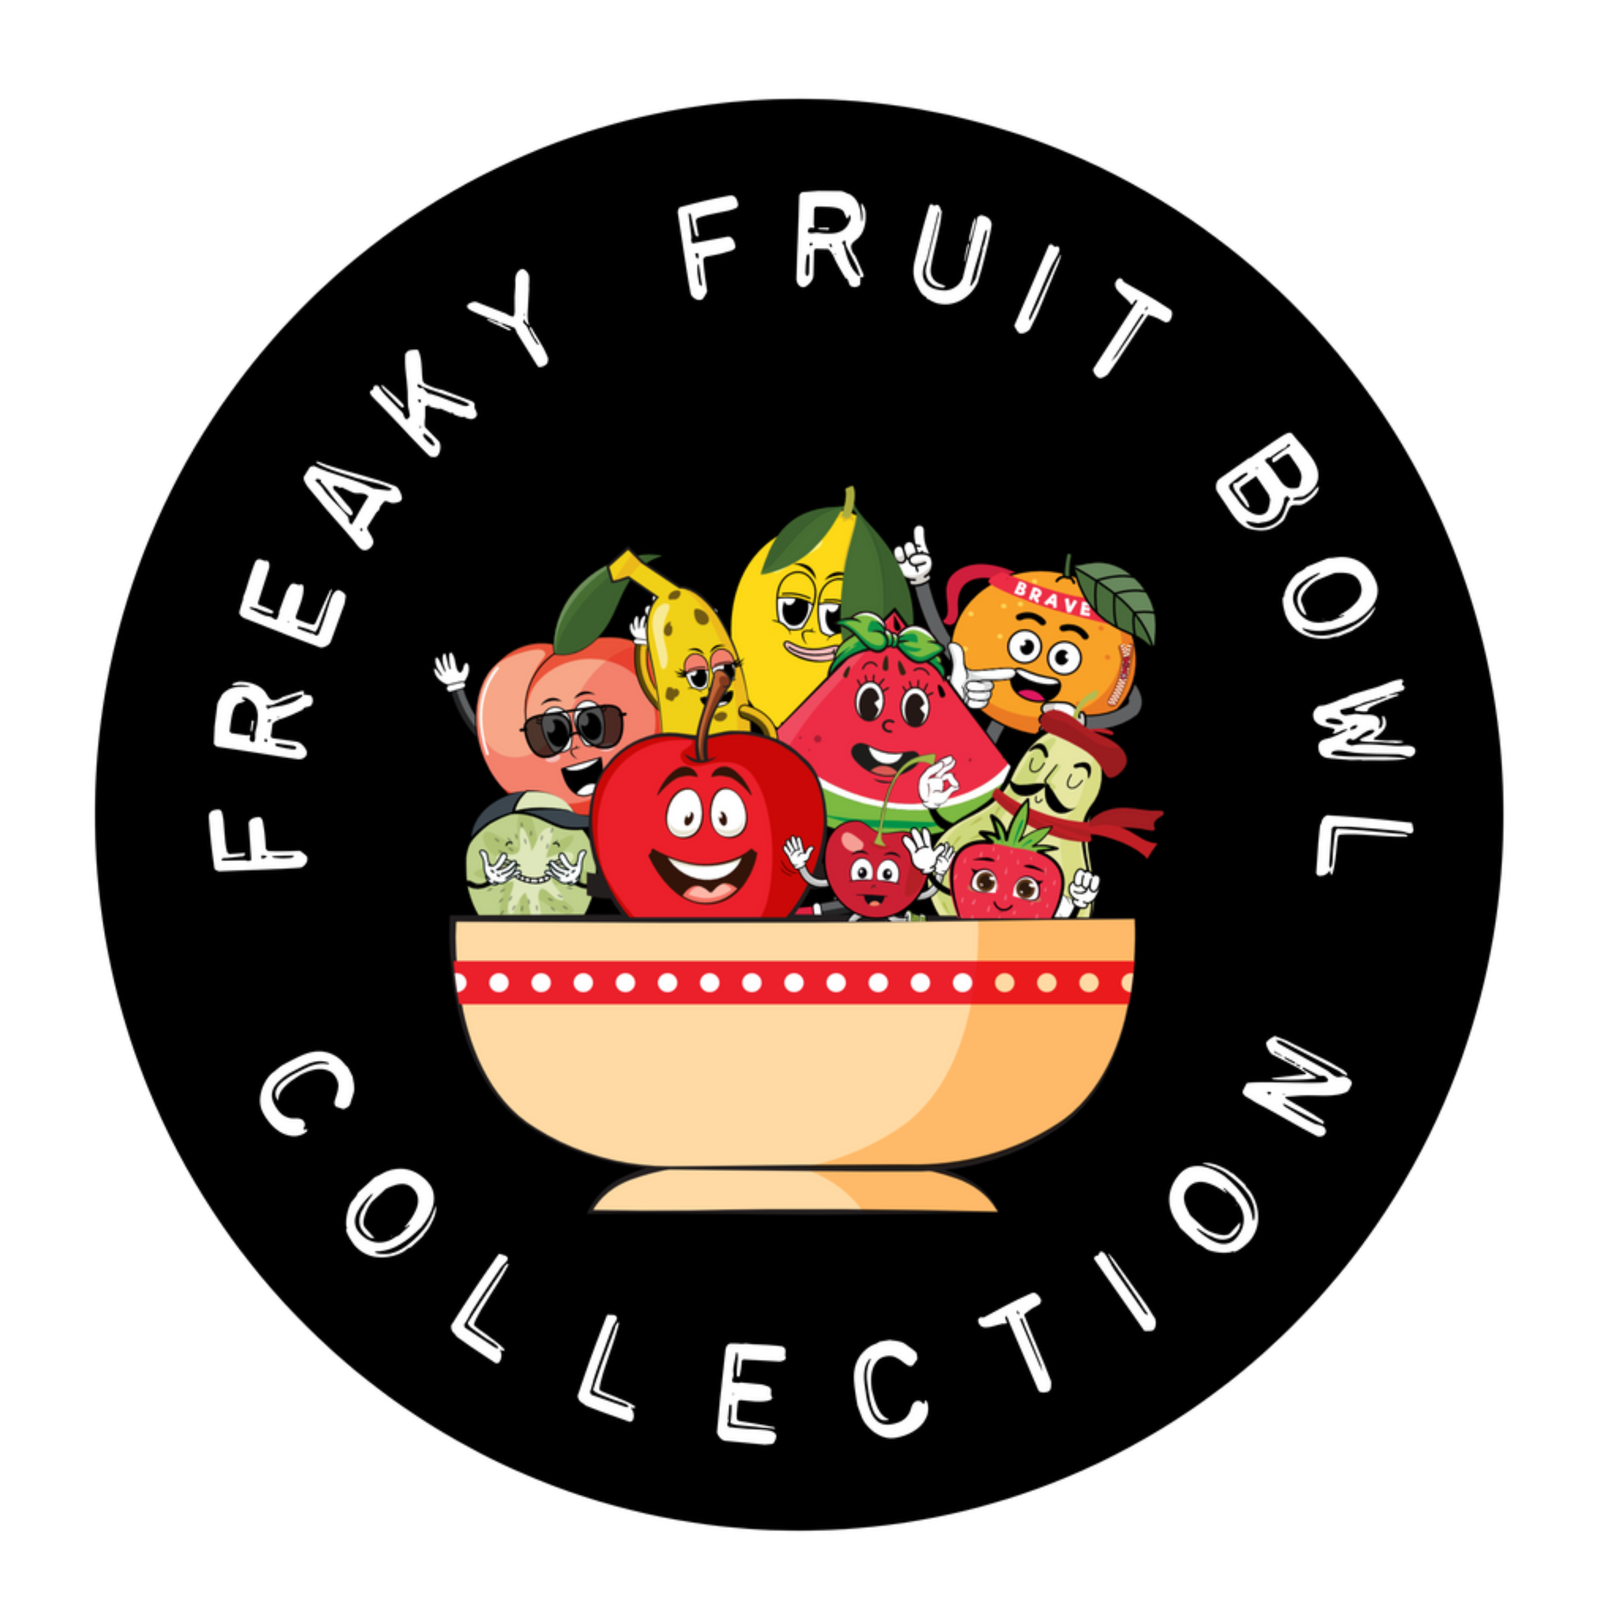 The Freaky Fruit Bowl